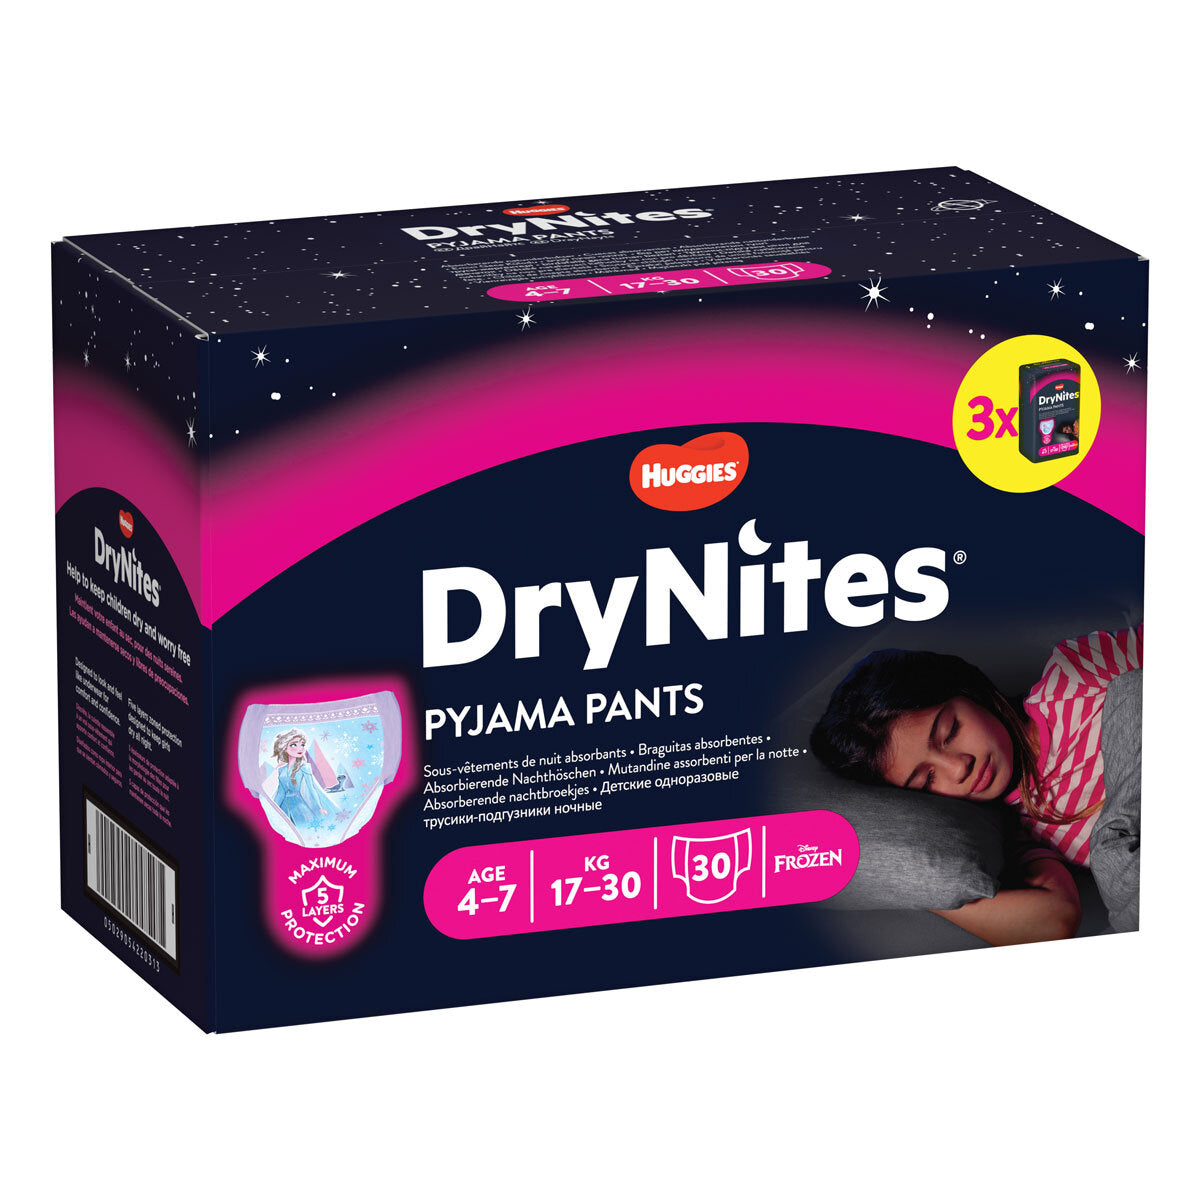 Huggies DryNites Pyjama Pants for Girls Years 4-7, 30 Pack